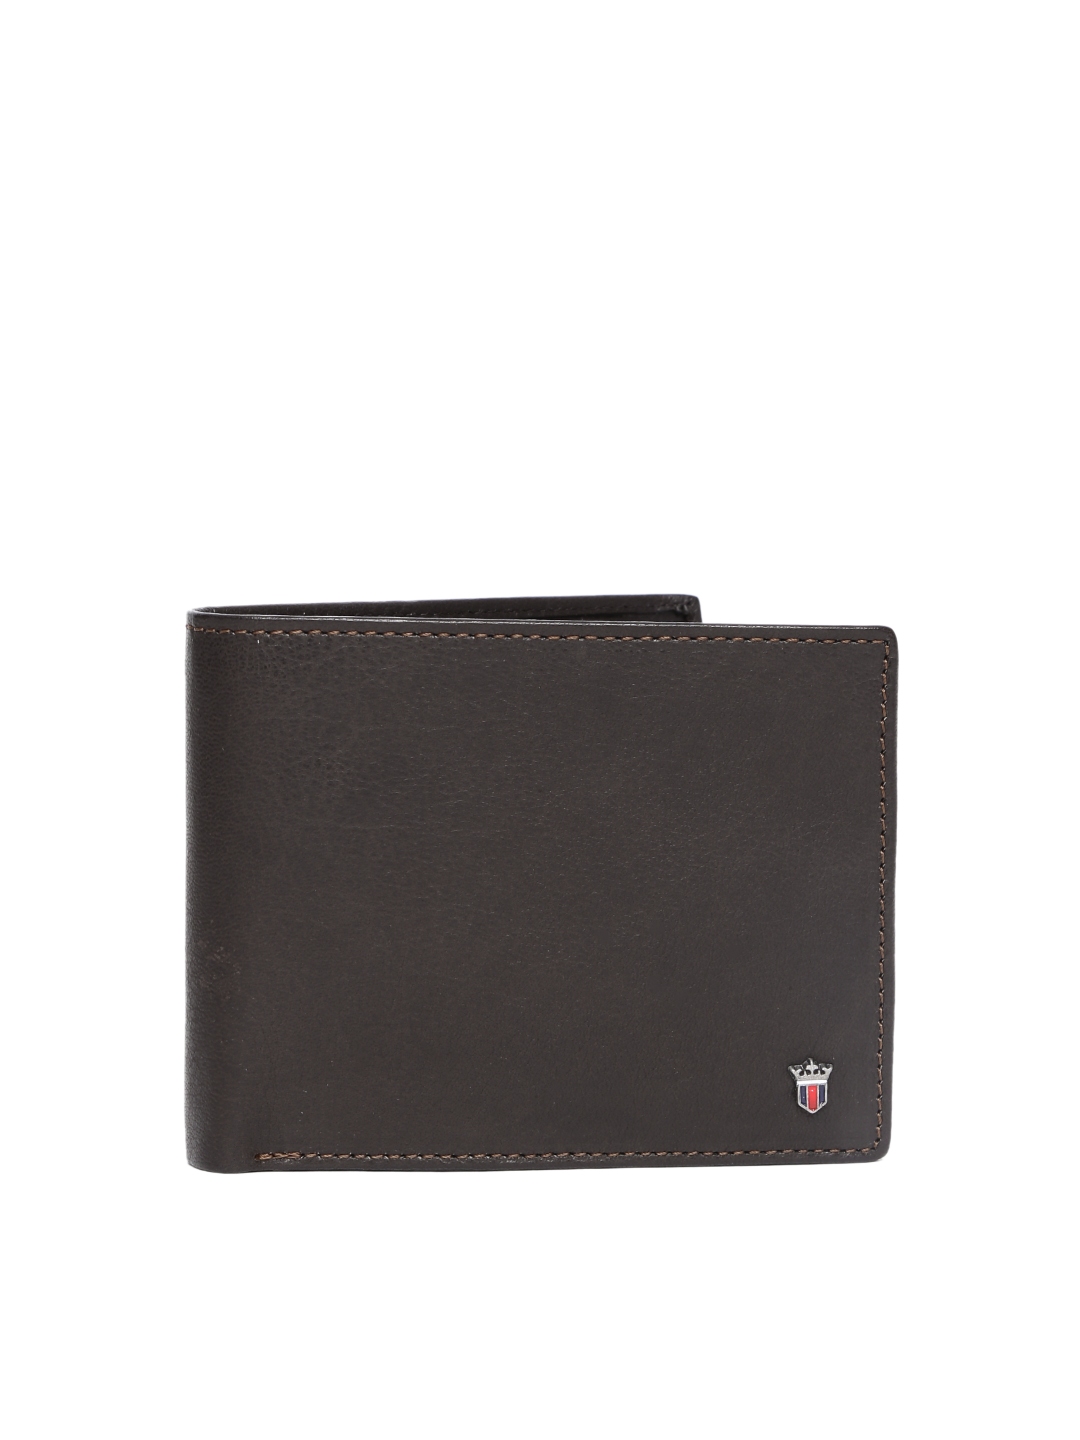 brown louis philippe wallet